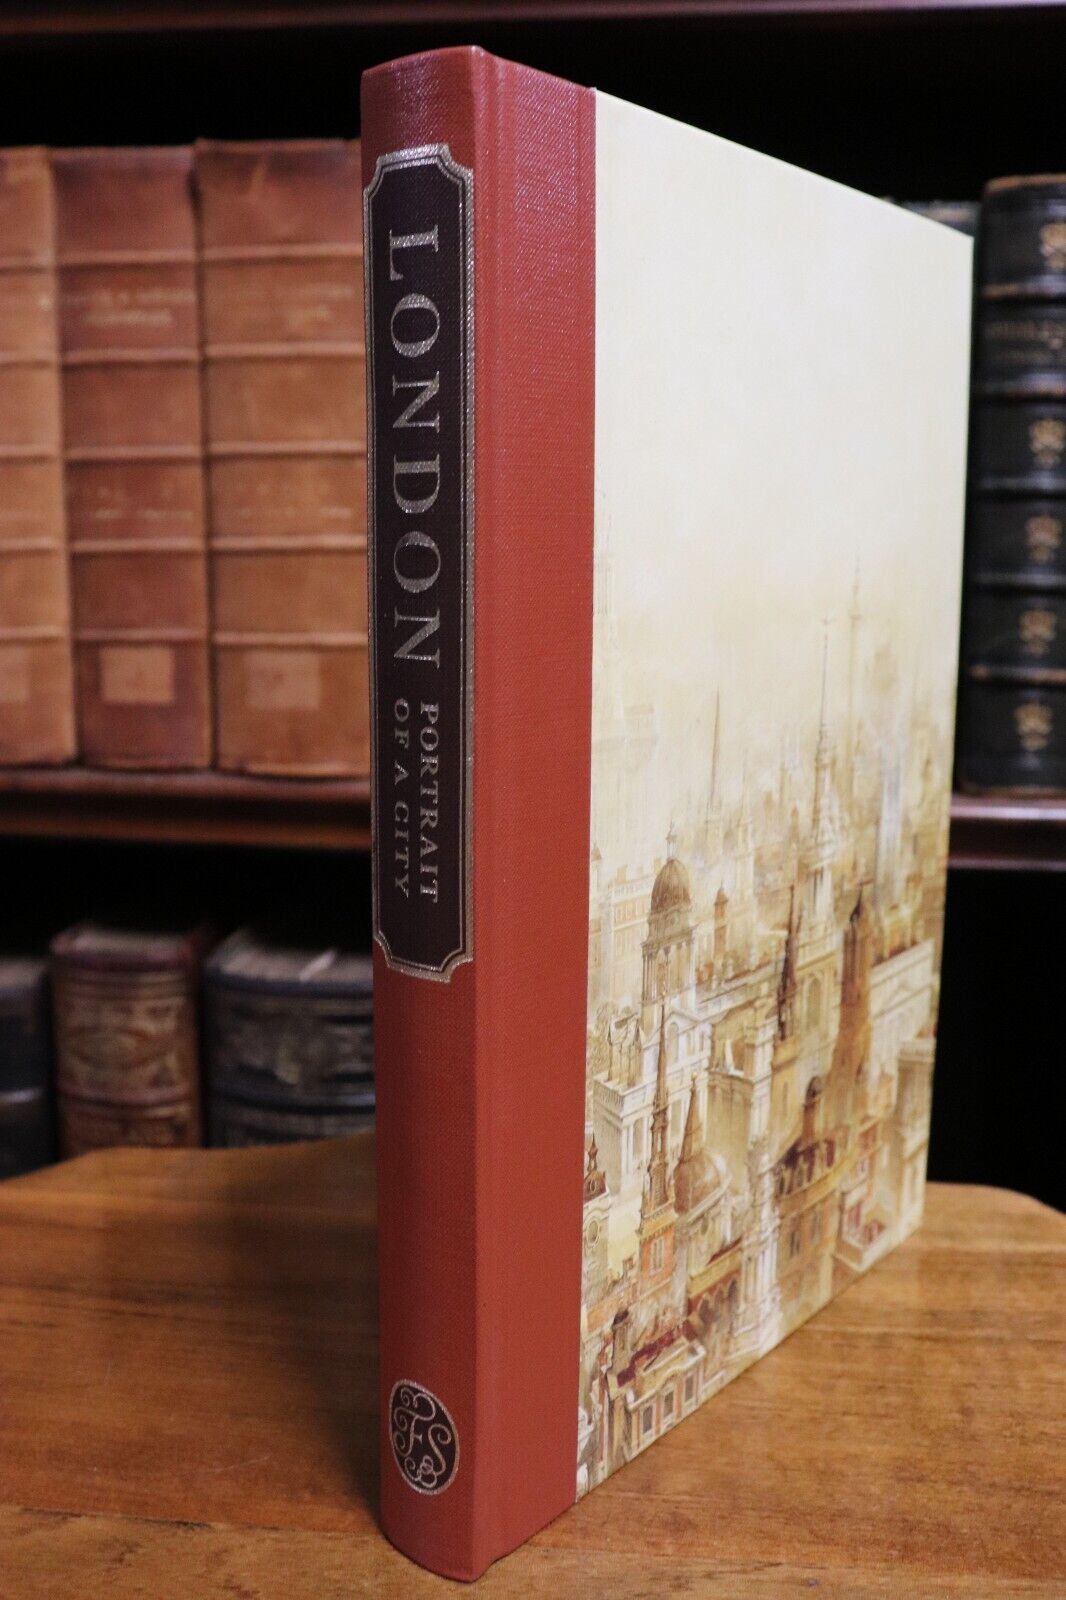 London: Portrait Of A City - 1998 - Folio Society - British History Book